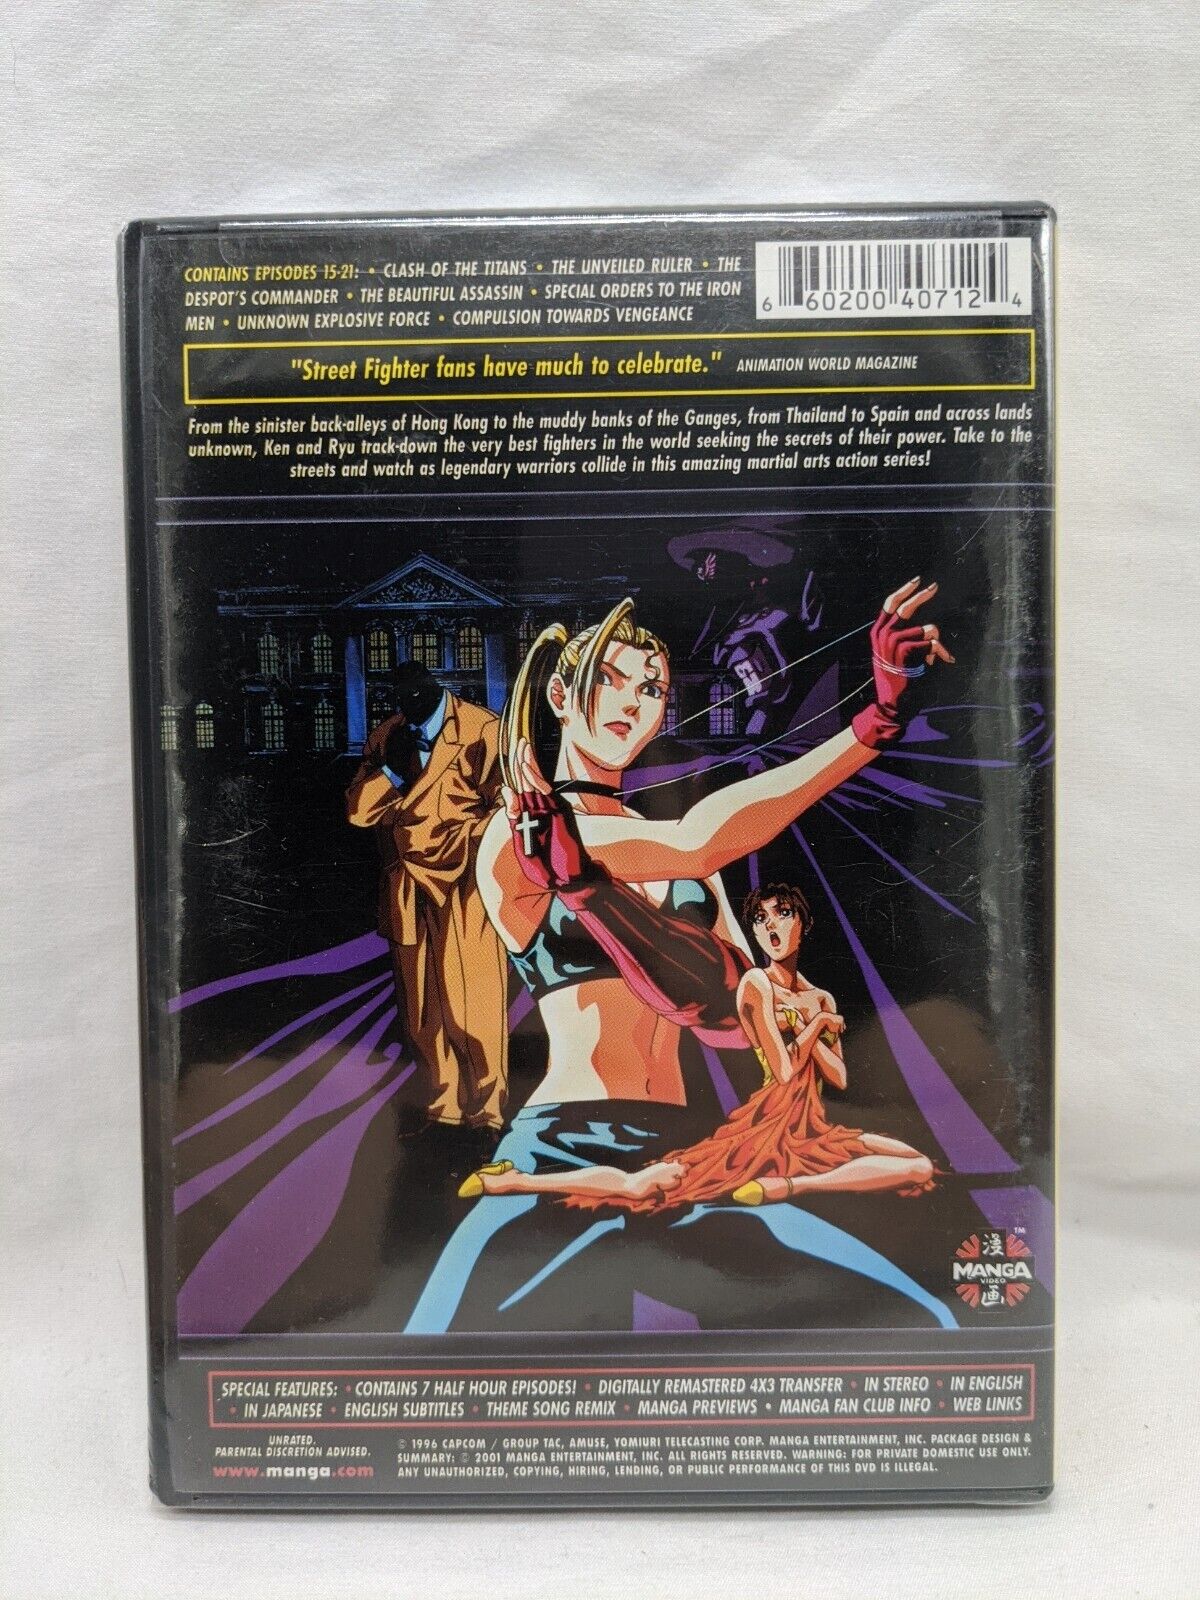 Street Fighter 2 Volume 3 DVD Sealed 660200407124 | eBay